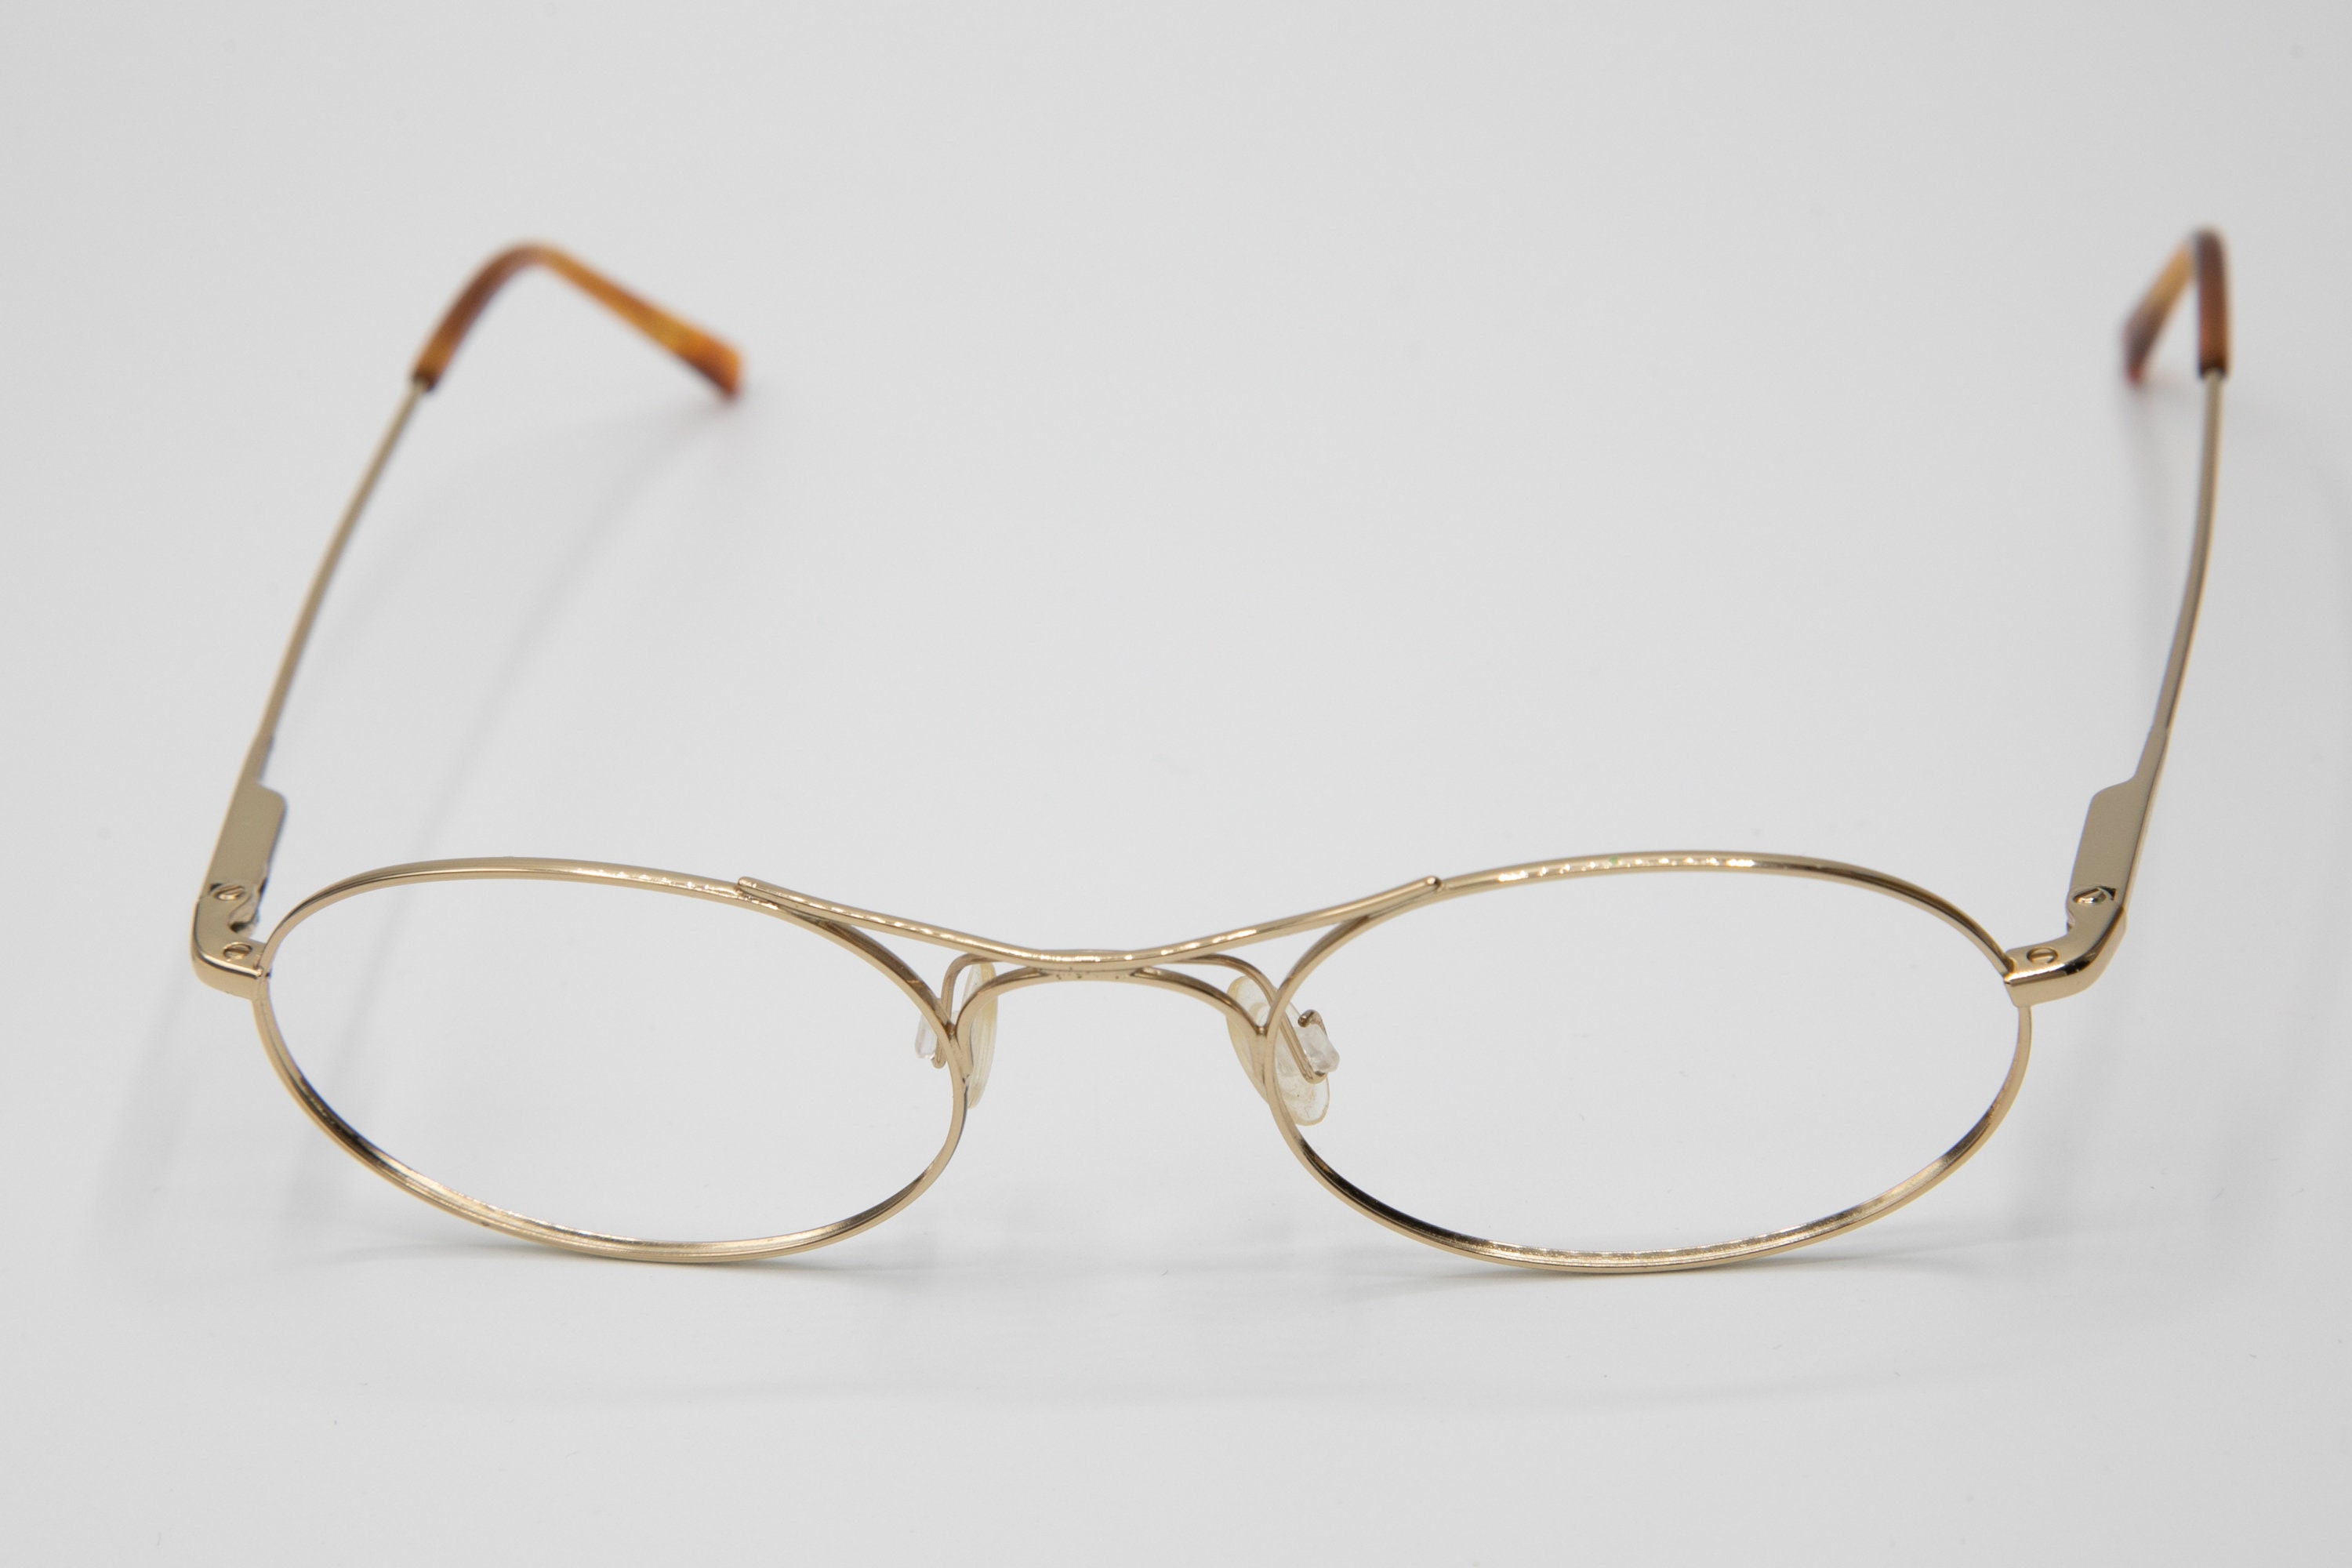 Armani Vintage Eyeglasses 1990s Oval Small Gold Metal Frame - Etsy Canada